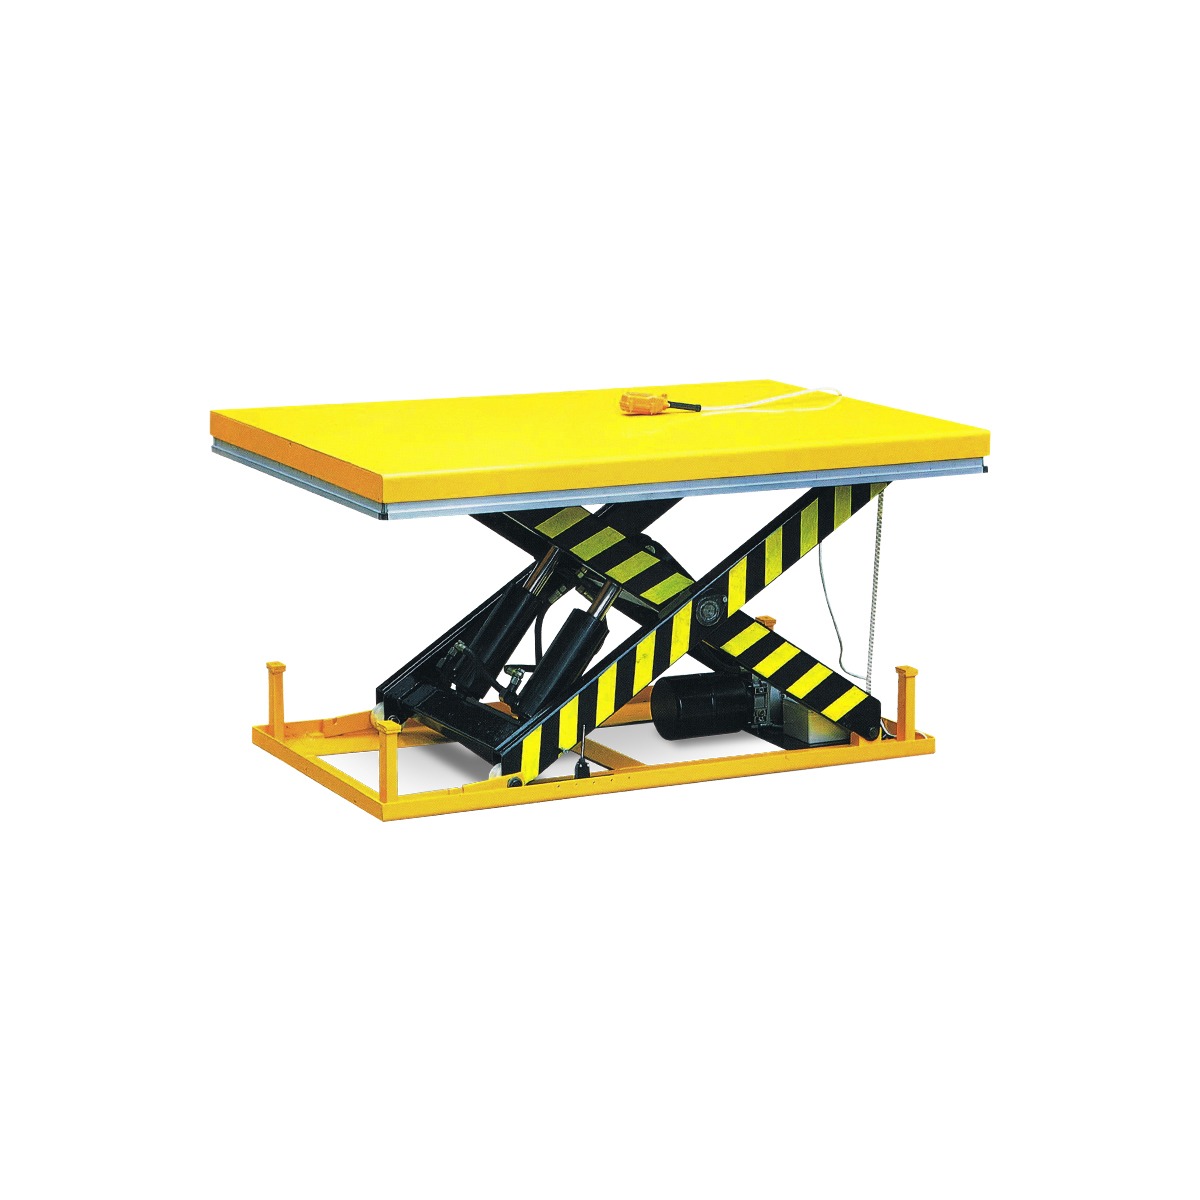 Buy Scissor Lift Table (Electric) in Scissor Lift Tables from Astrolift NZ